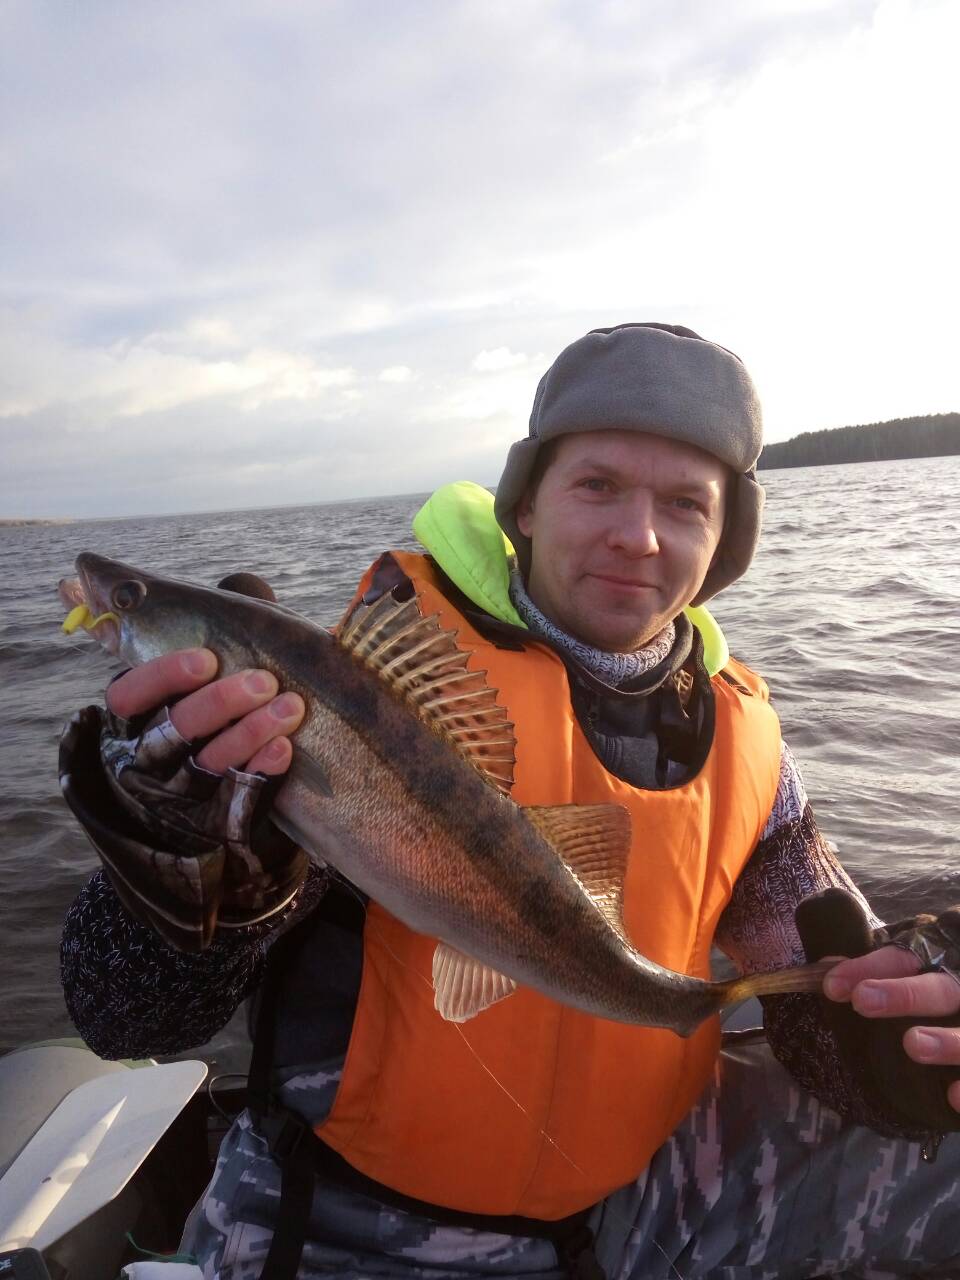  То ли закрытие 17-го, то ли открытие 18-го ... | Отчеты о рыбалке в Беларуси